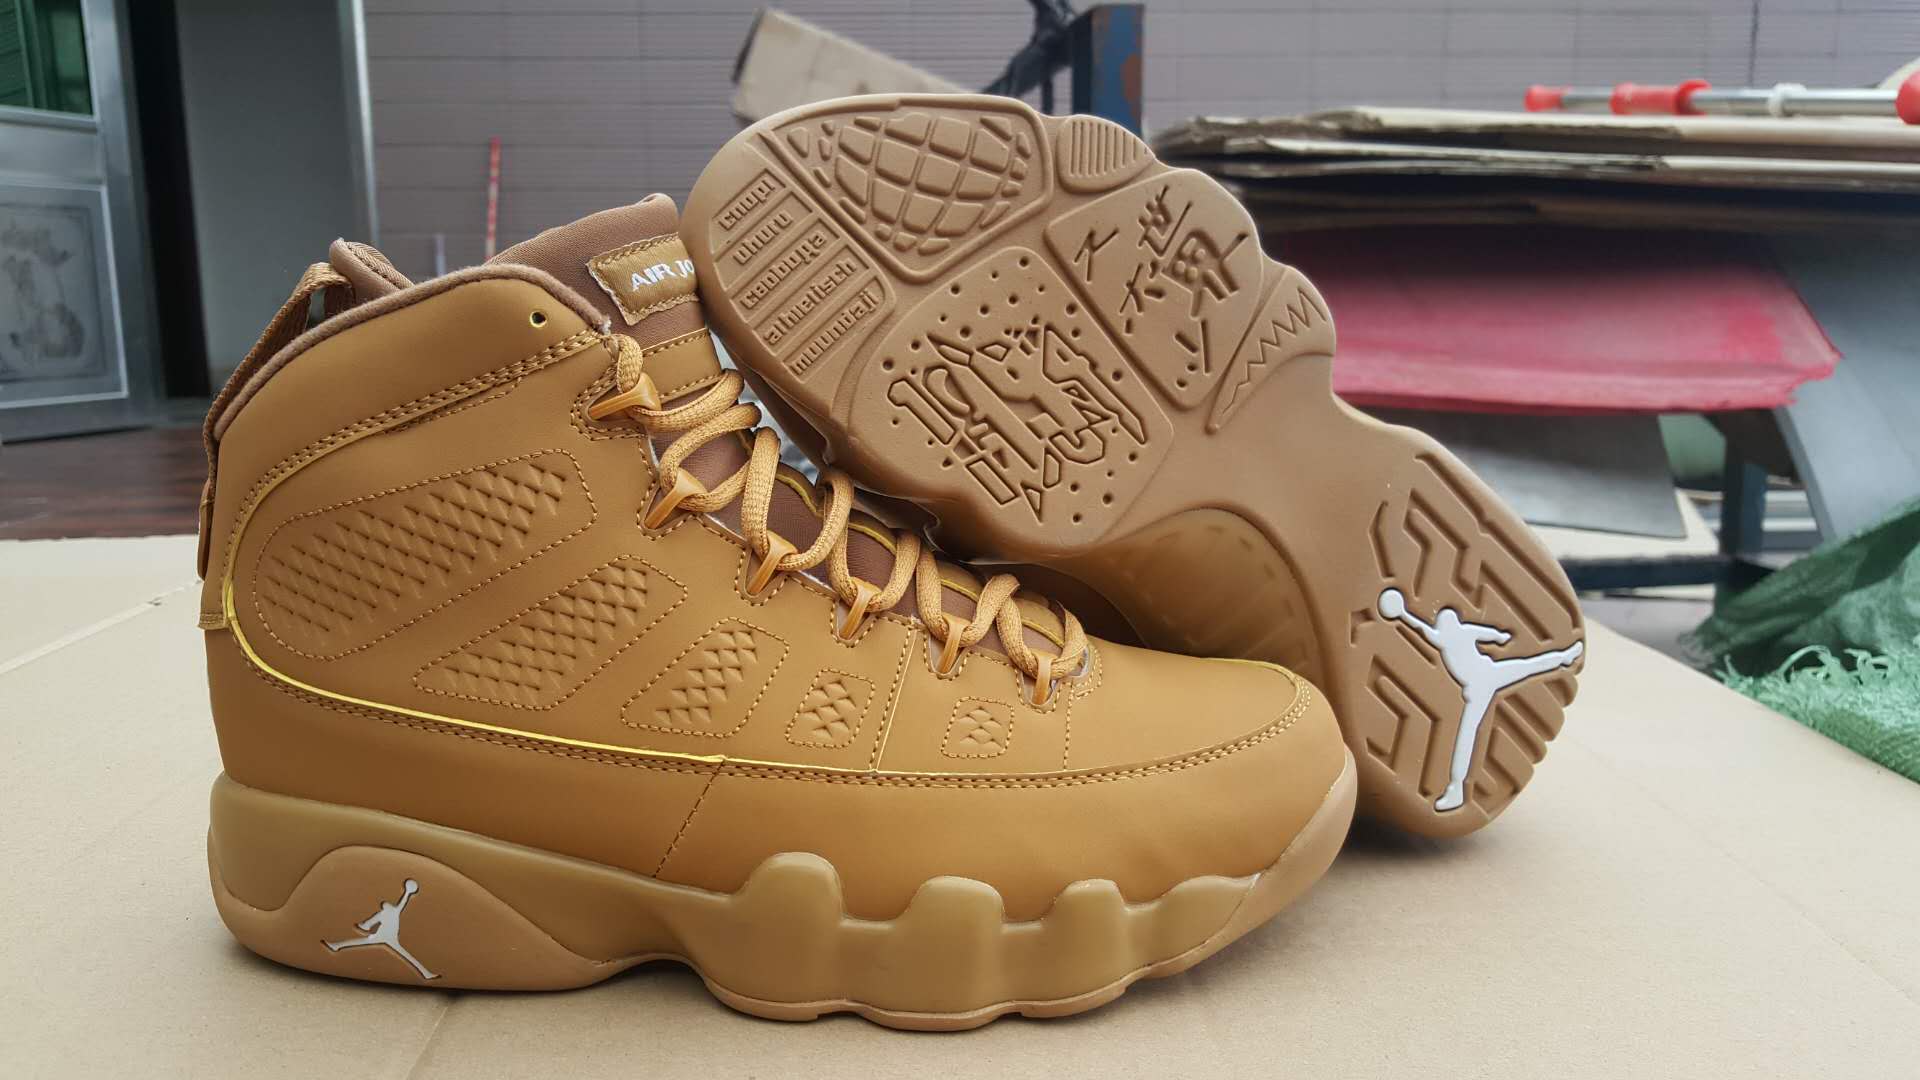 New Air Jordan 9 Wheat Yellow Shoes